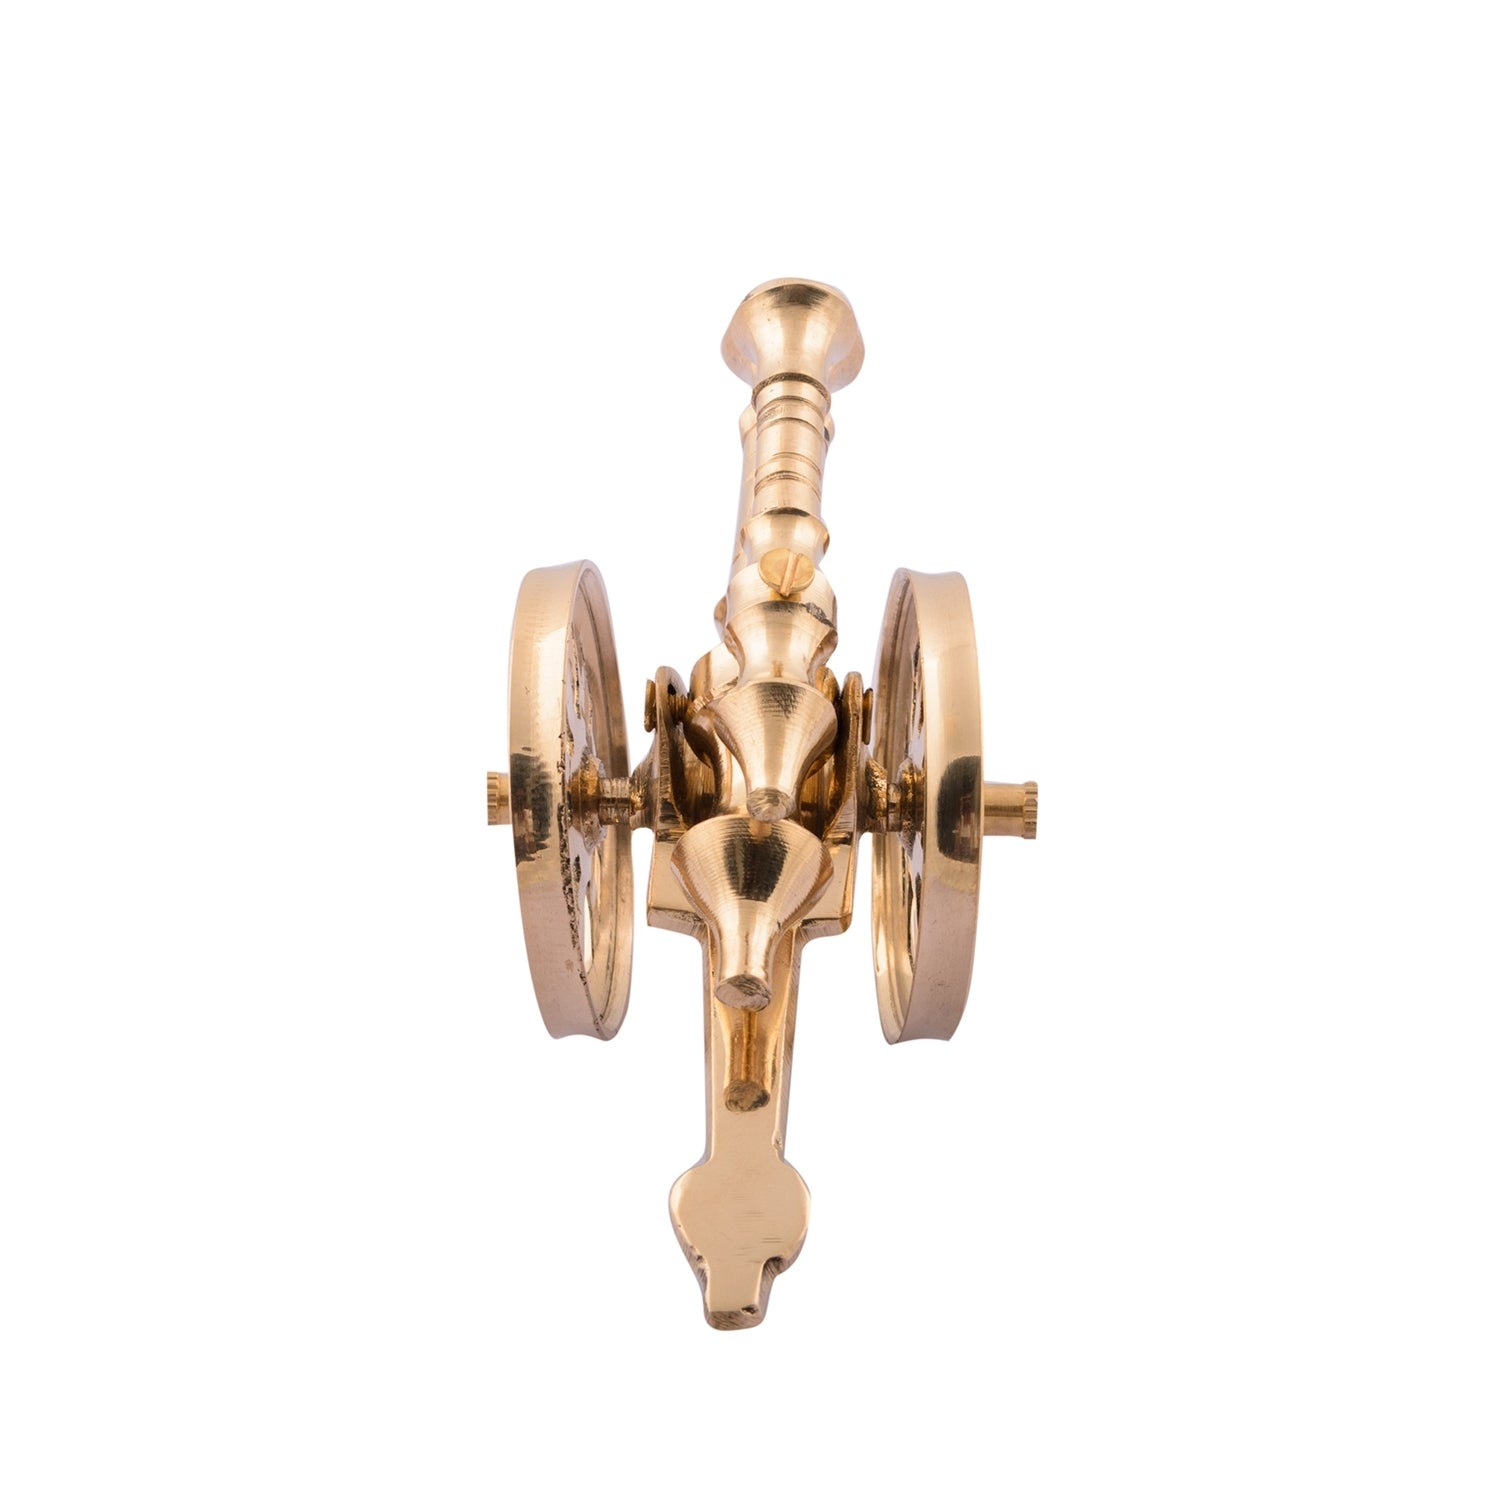 Gold Brass Decorative Cannon Showpiece for Home DÃ©cor 4